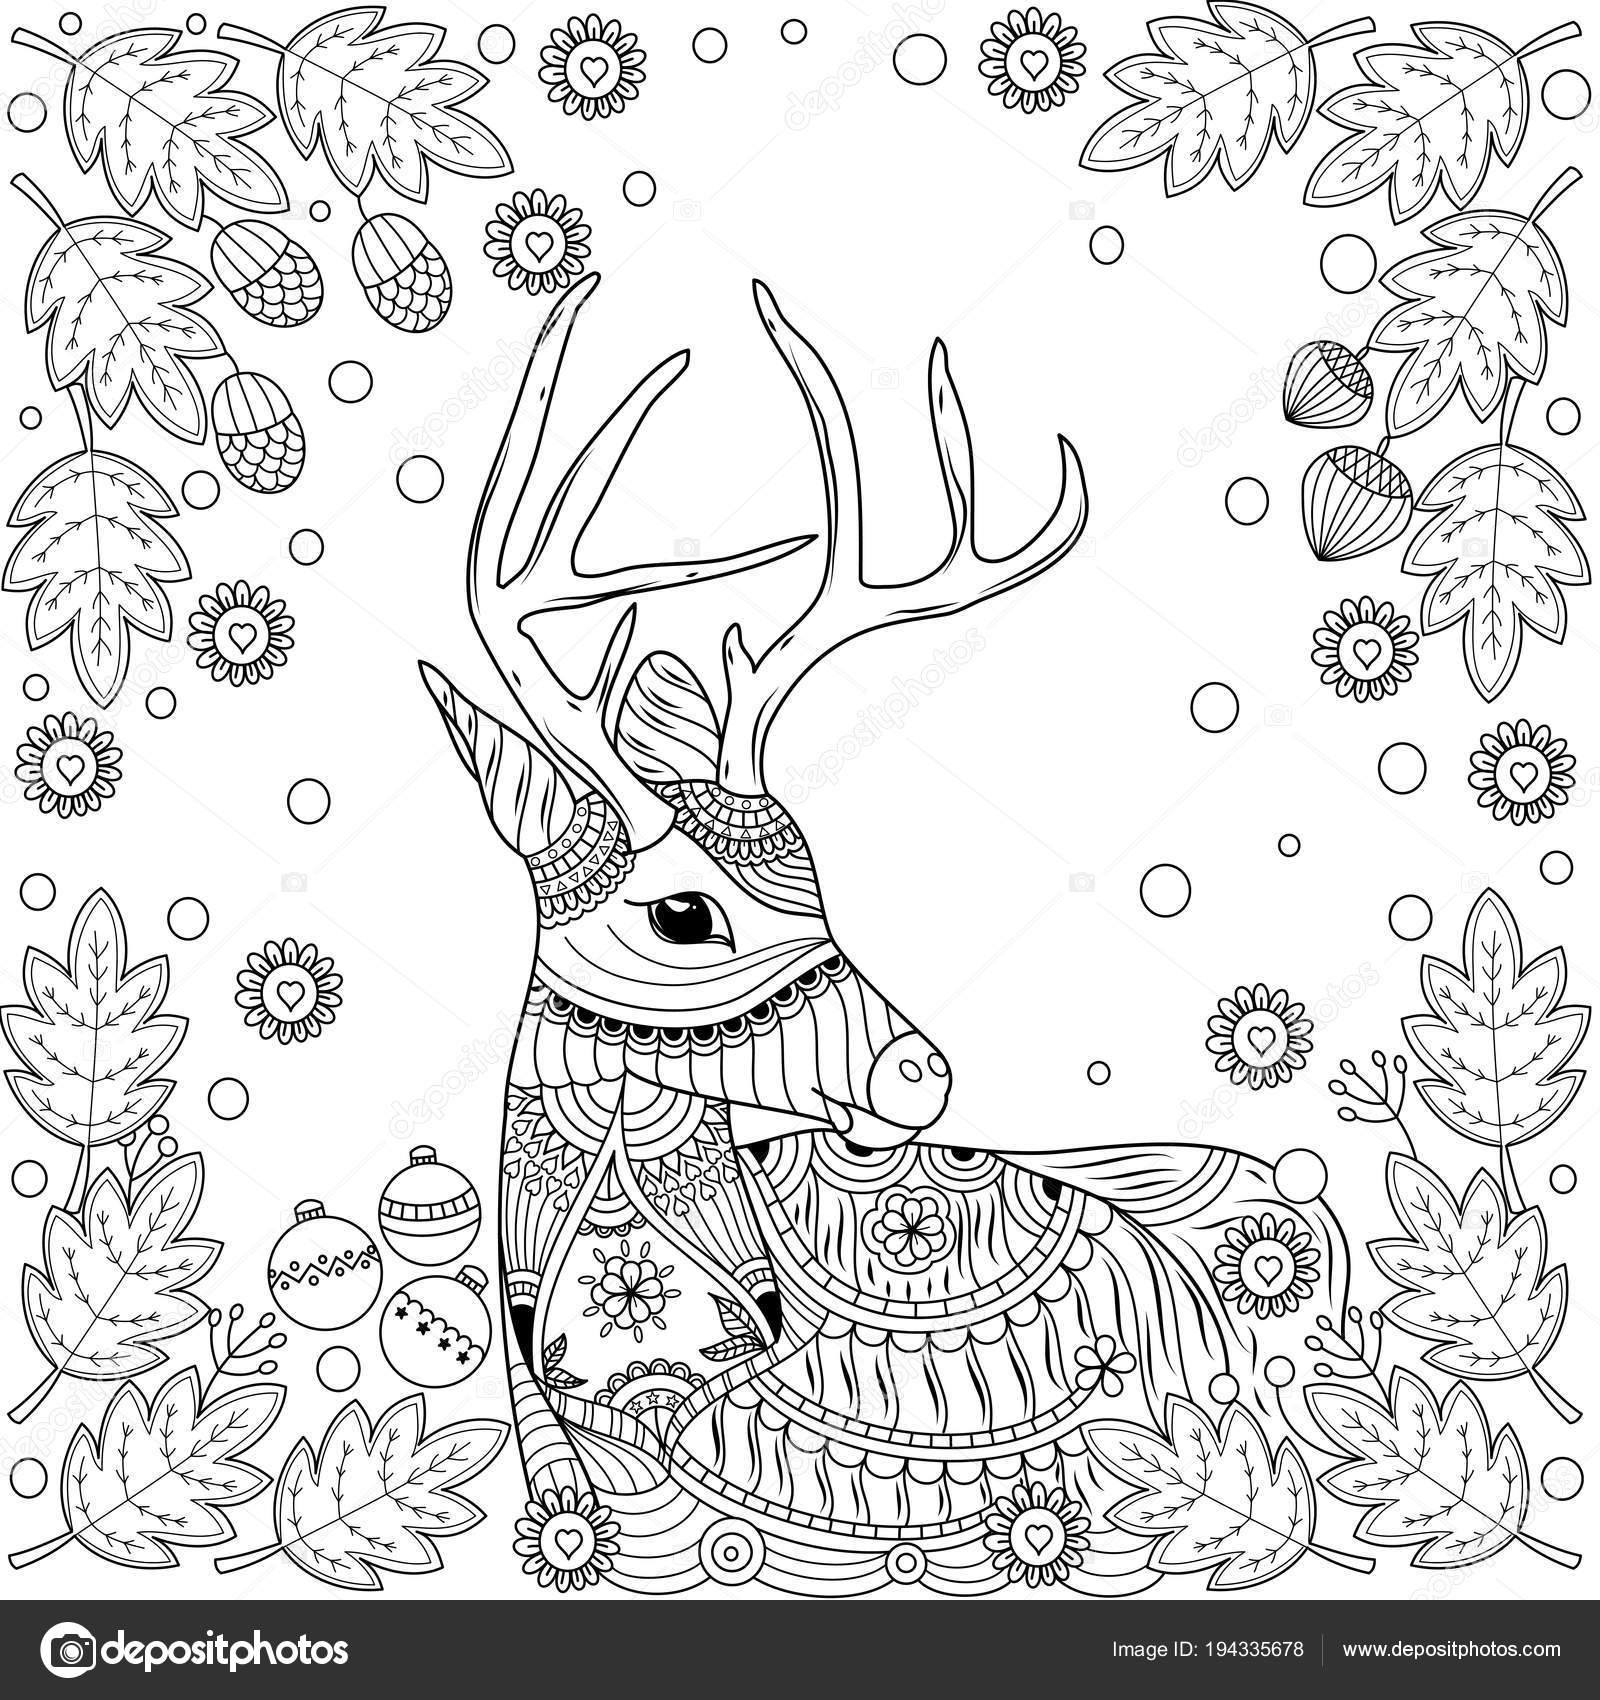 Coloring book reindeer winter adult zentangle style vector illustration handdrawn stock vector by noonizen